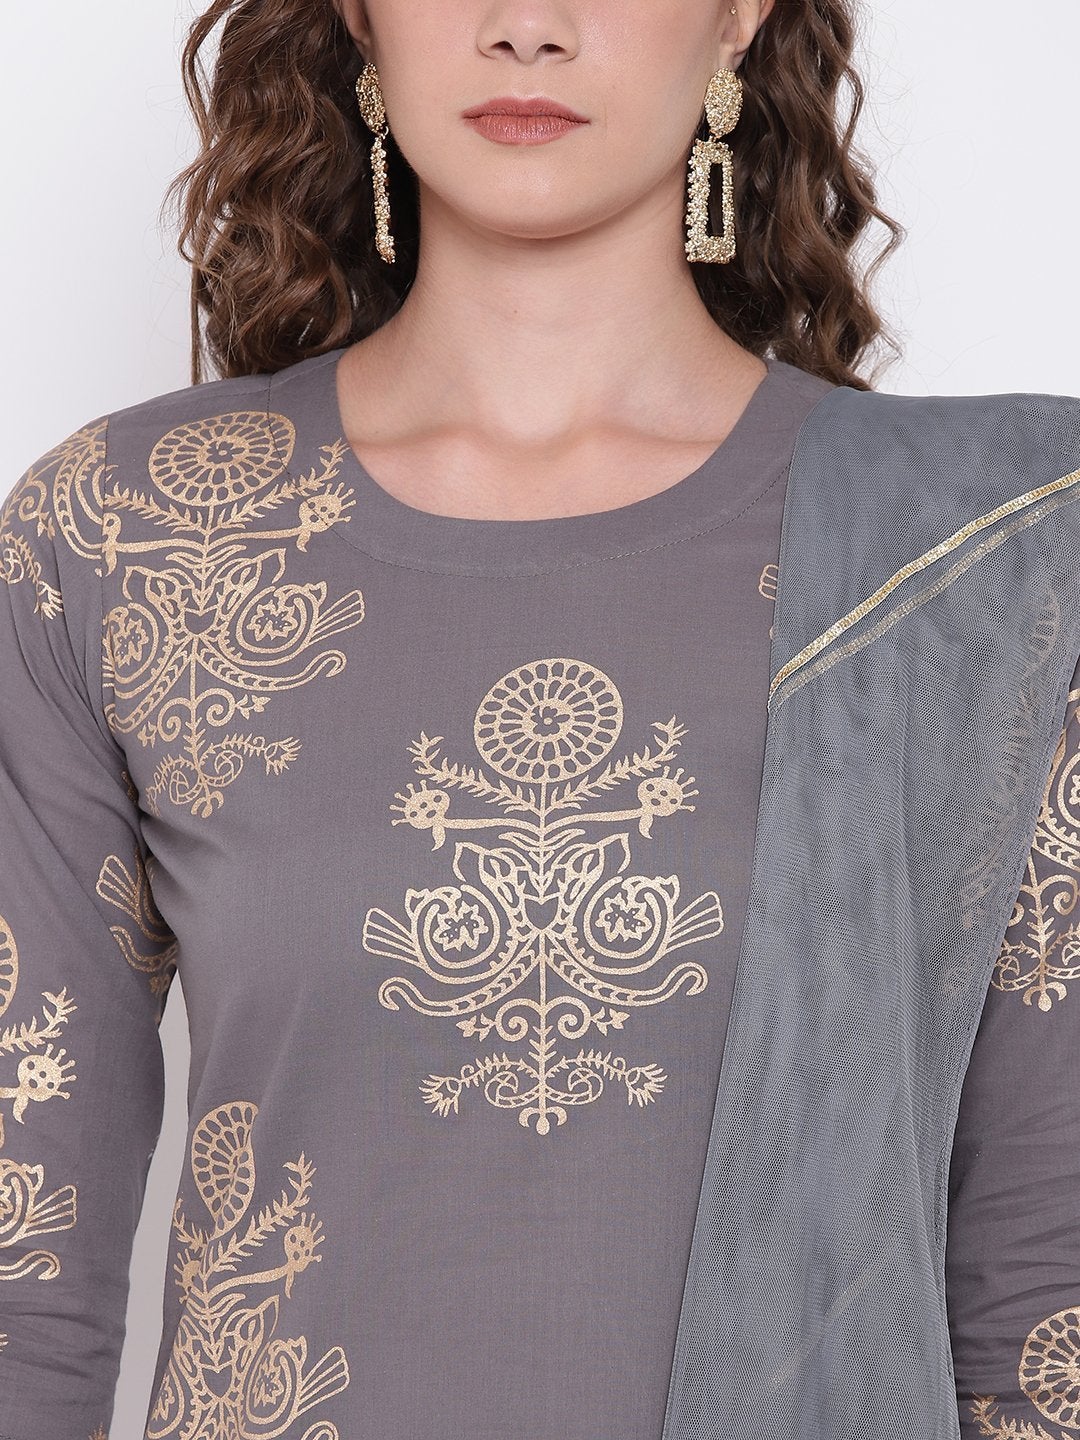 Women's Grey Foil Print Cotton Sharara Set With Net Dupatta  - Wahenoor